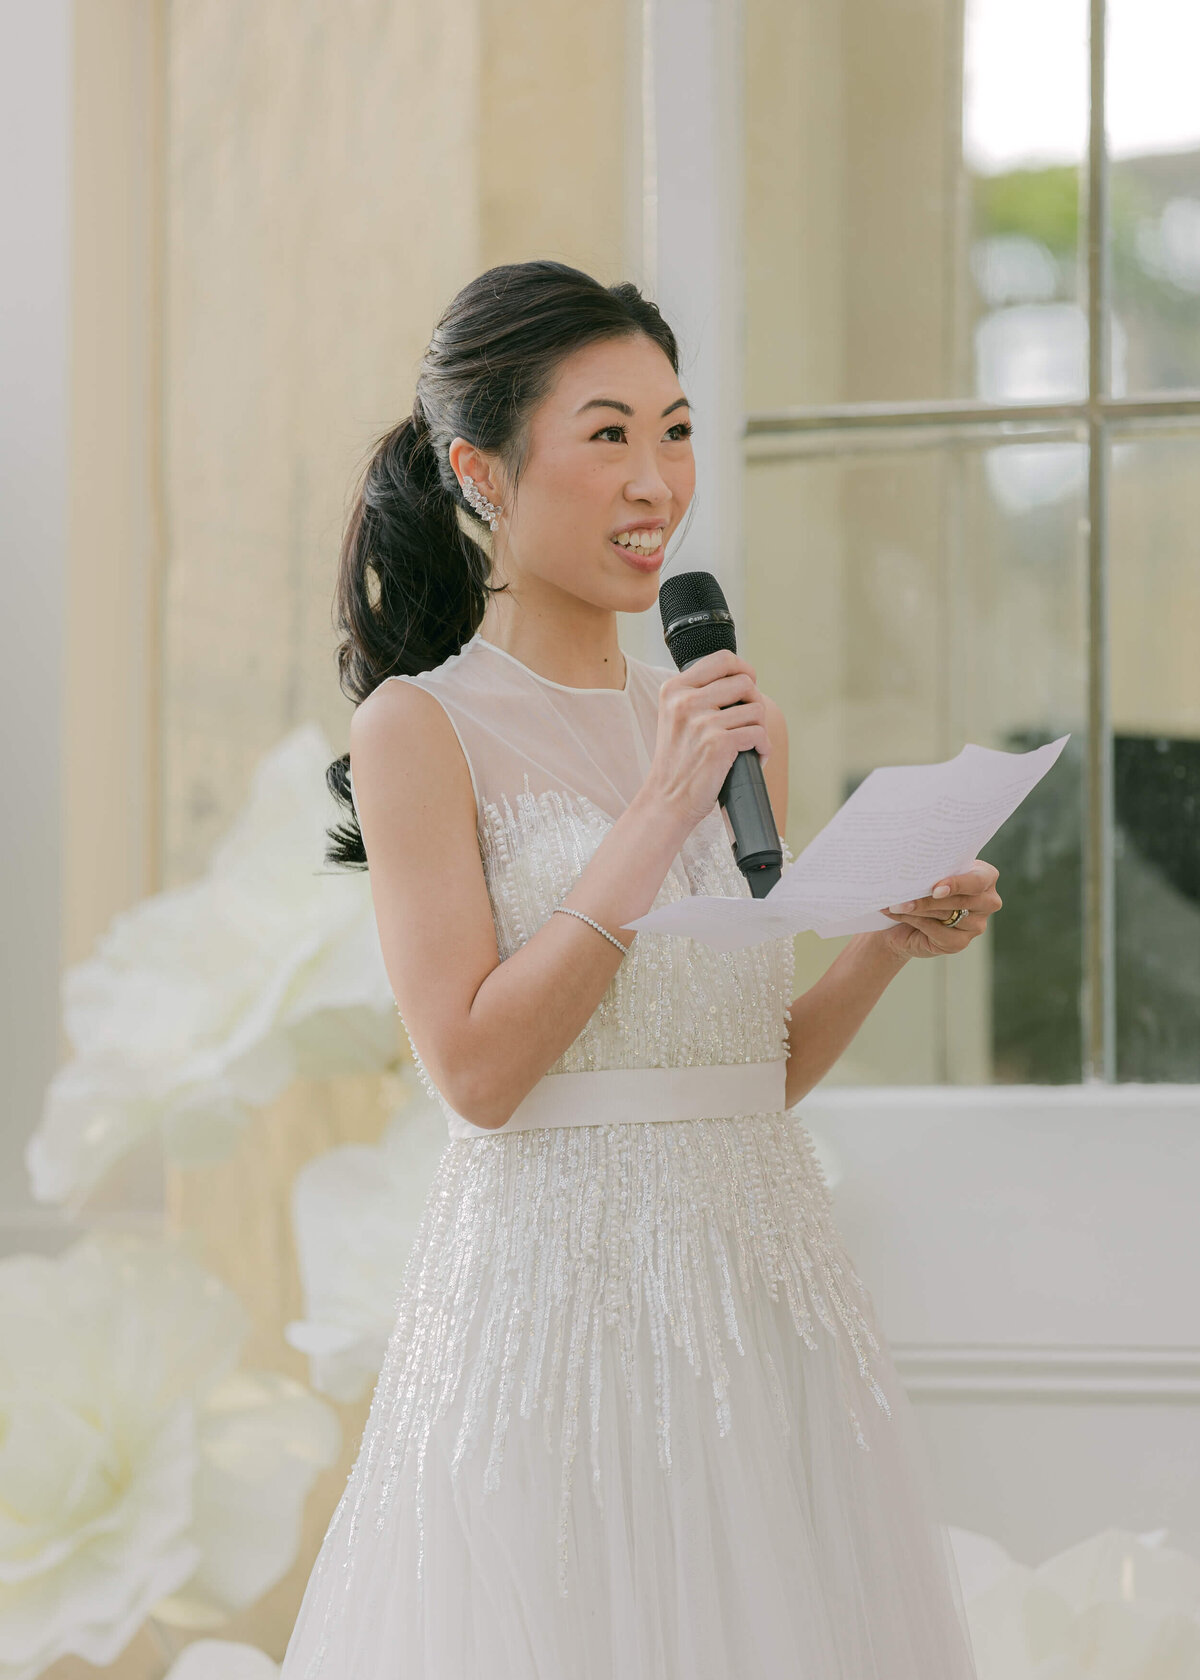 chloe-winstanley-weddings-syon-park-conservatory-ceremony-bride-speech